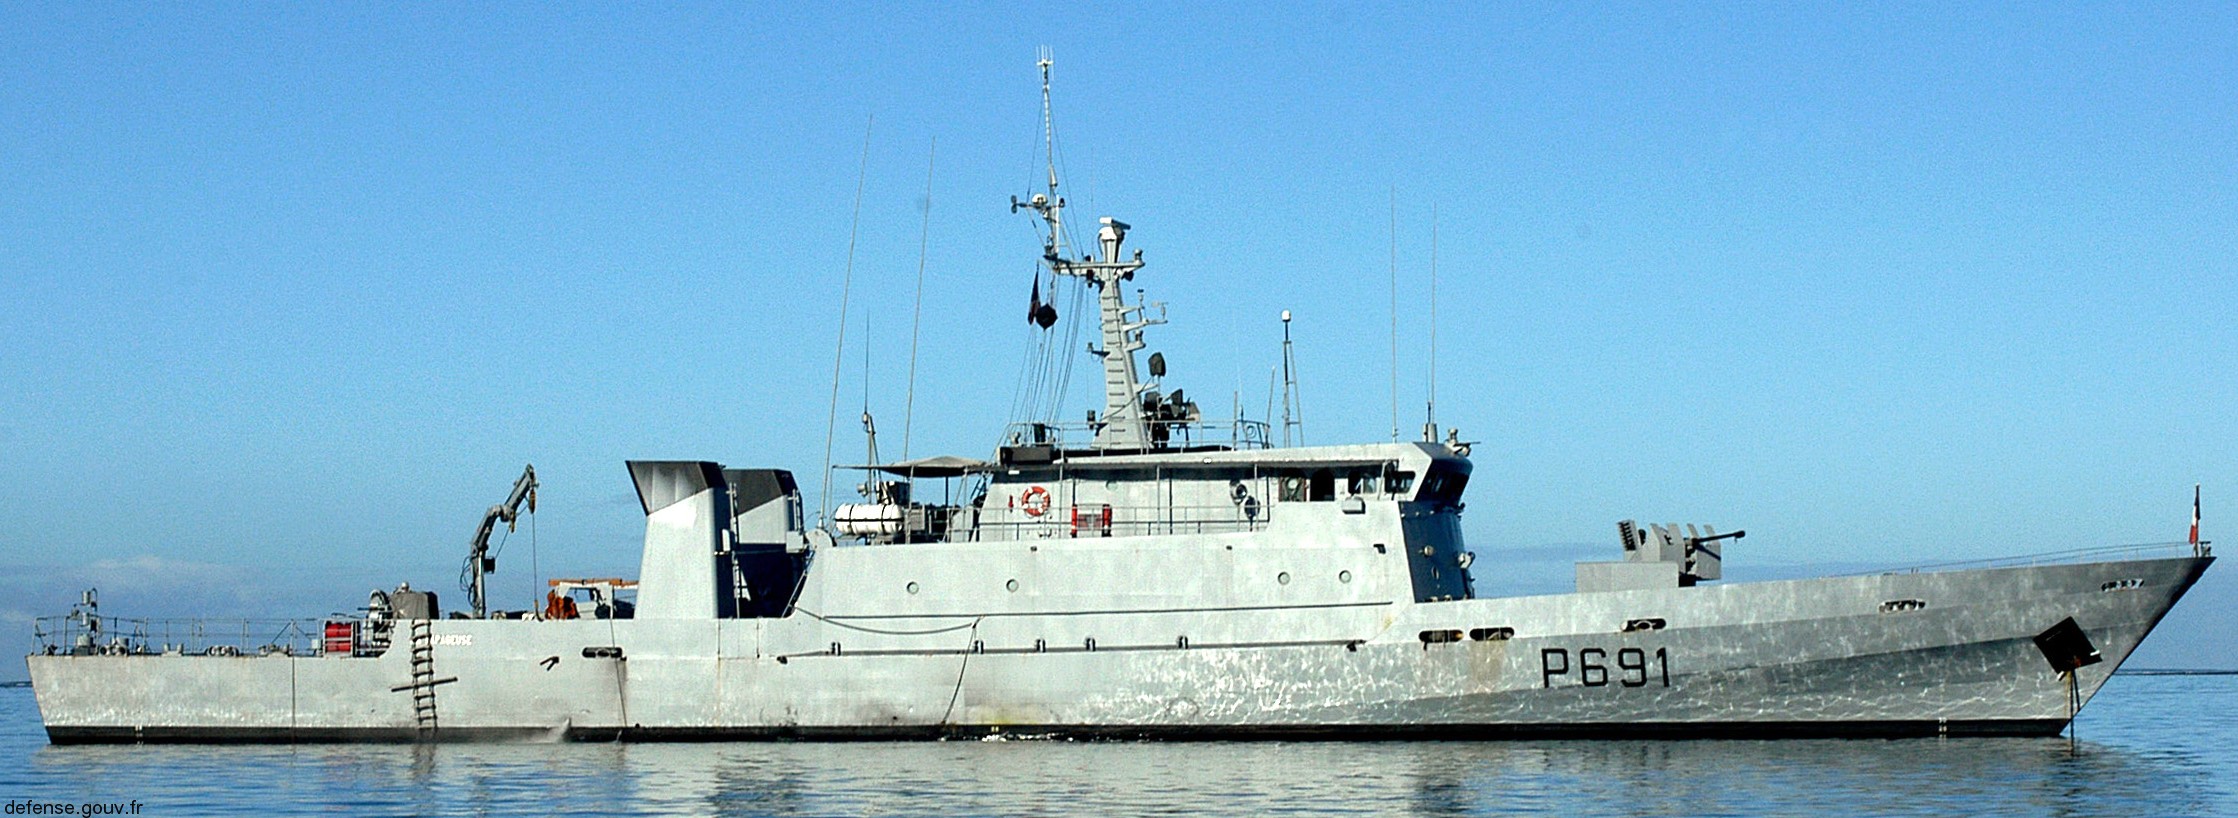 p-691 la tapageuse l'audacieuse p400 class patrol vessel french navy patrouilleur marine nationale 03